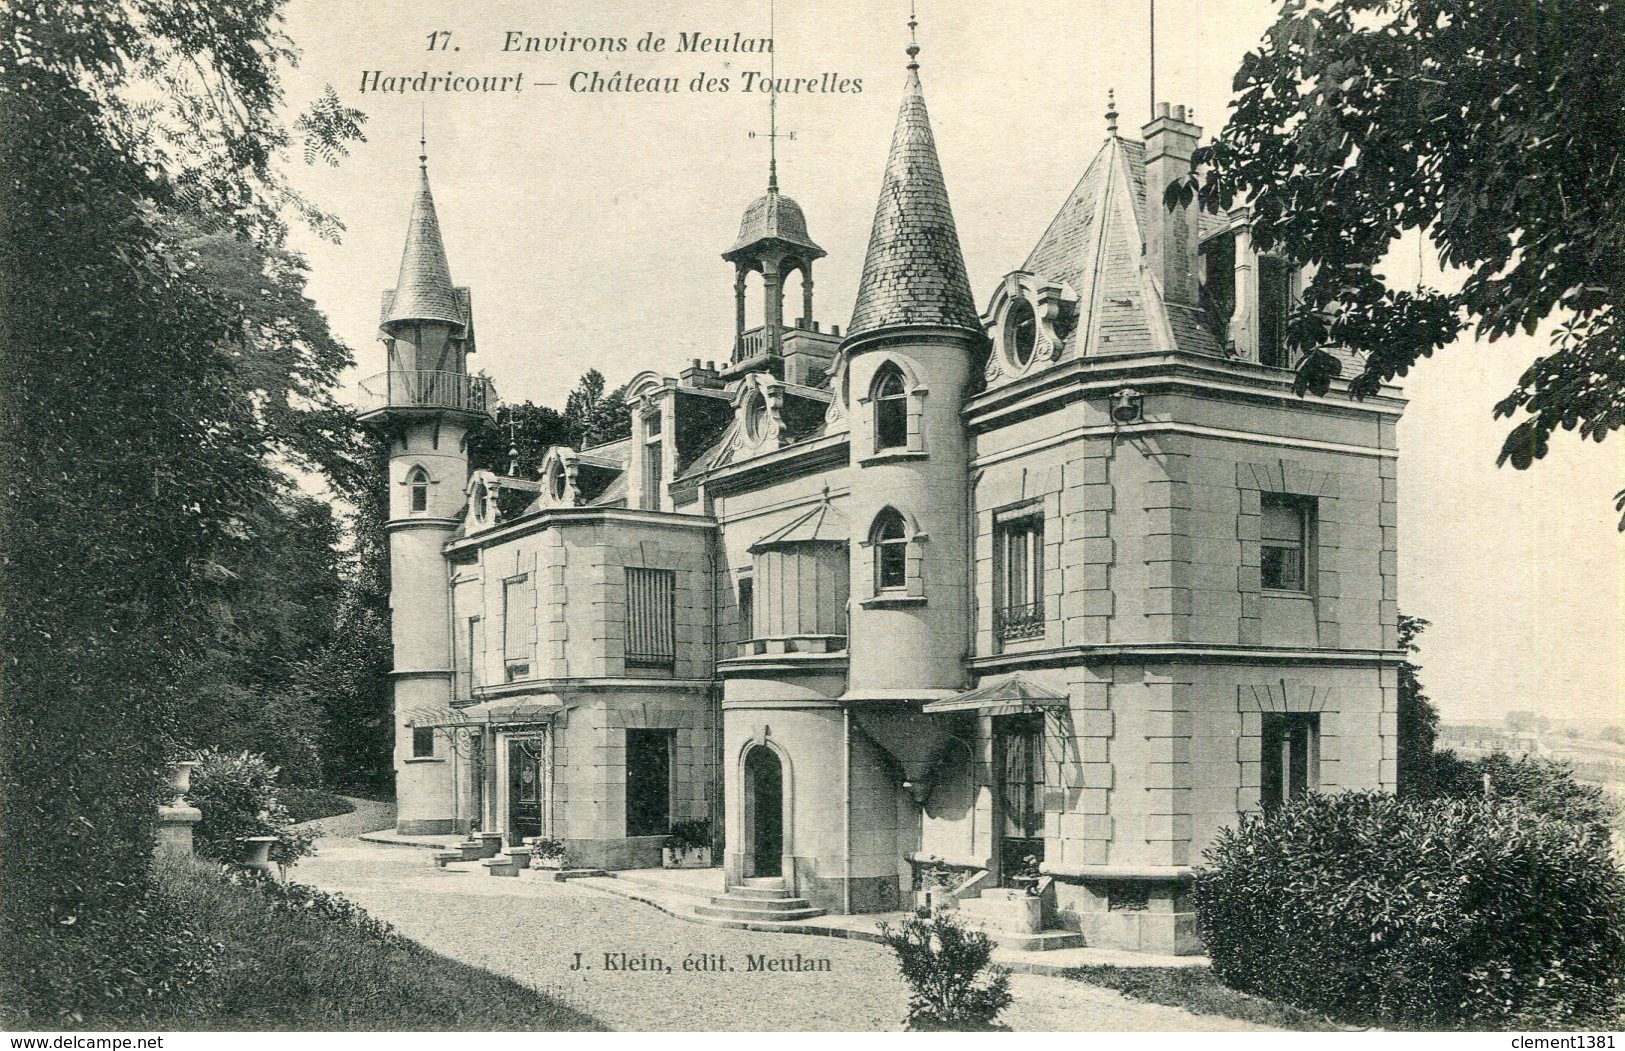 Hardicourt Chateau Des Tourelles - Hardricourt